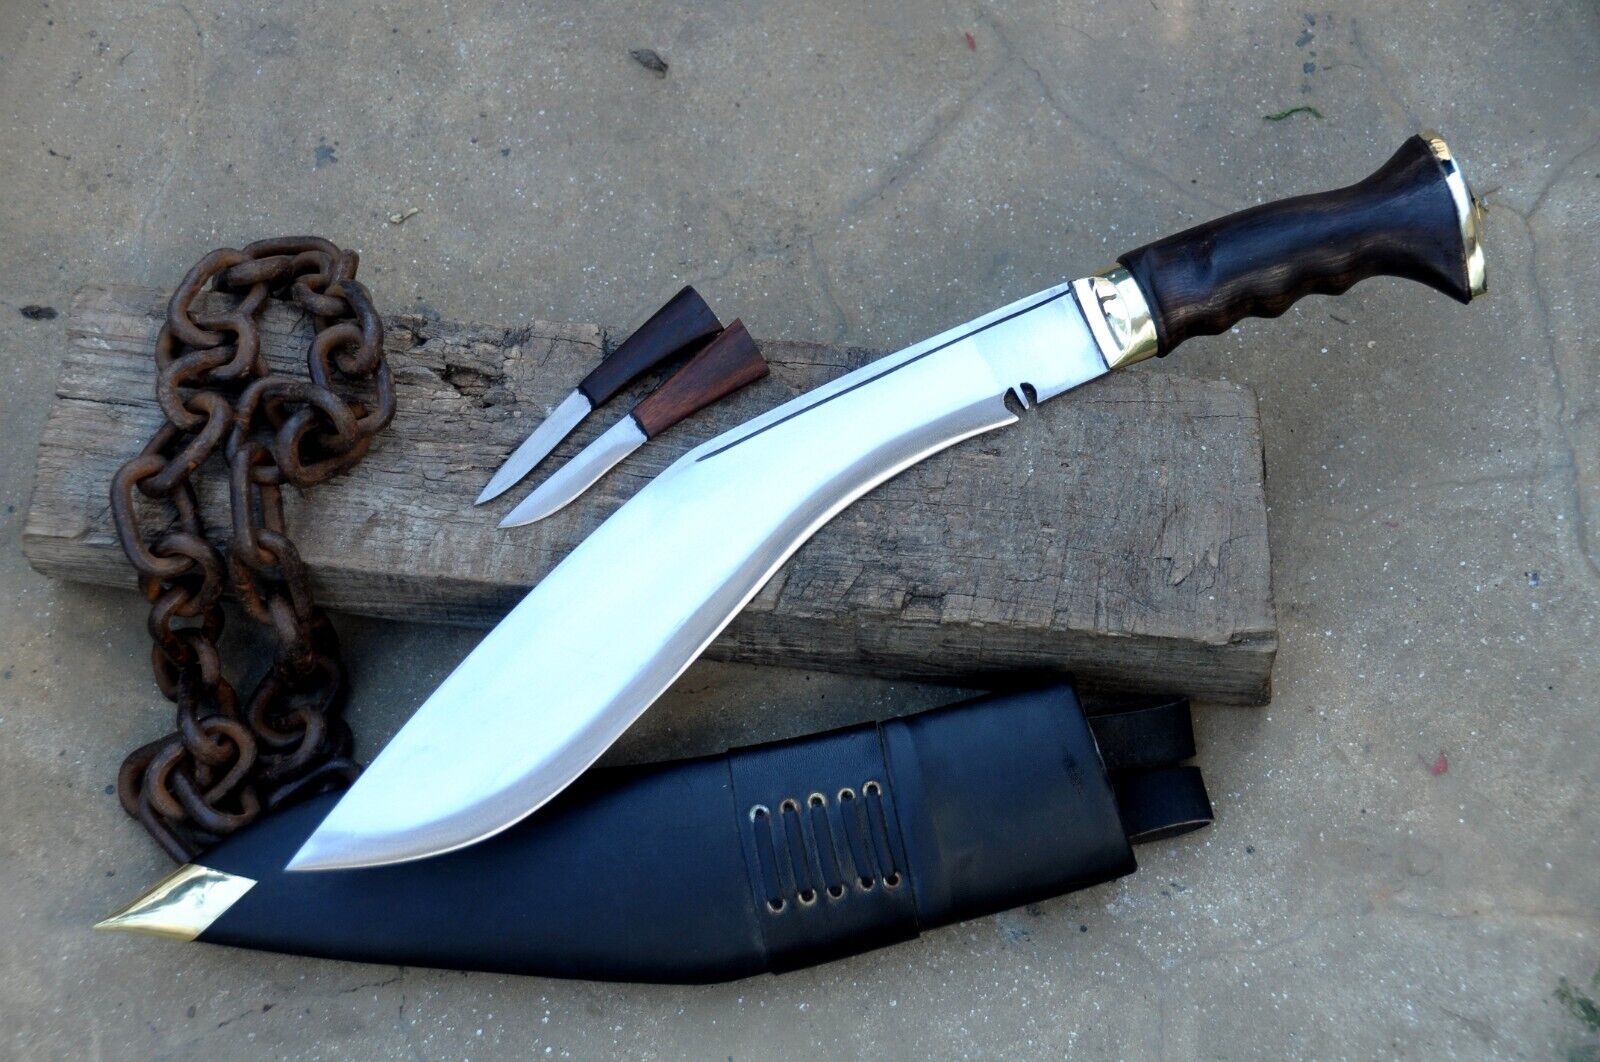 Gripper Handle Gurkha khukuri knife-kukri-large camping,tactical, hunting knives